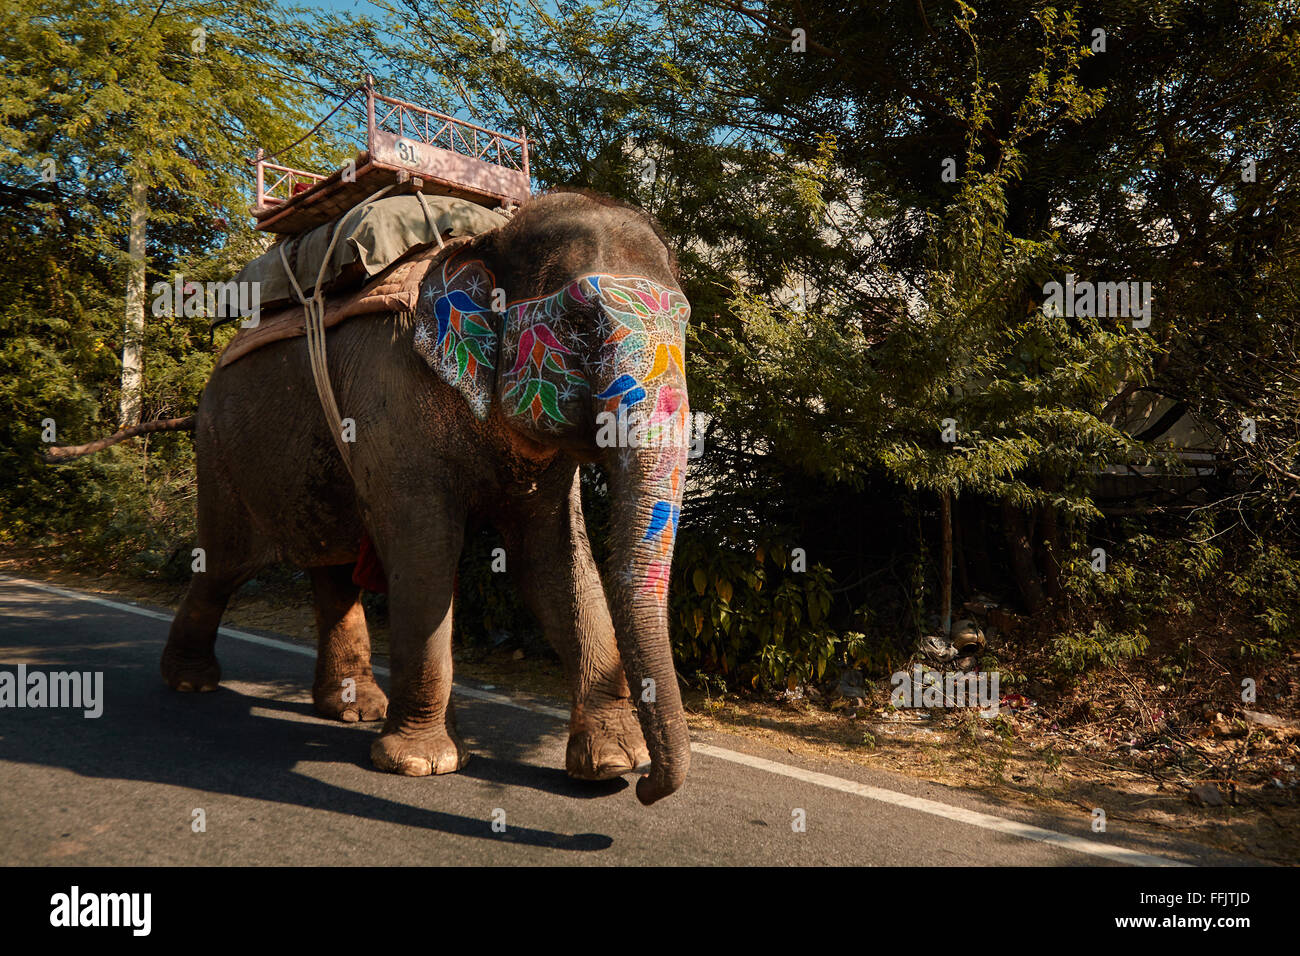 Painted walking elephant on road Stock Photo